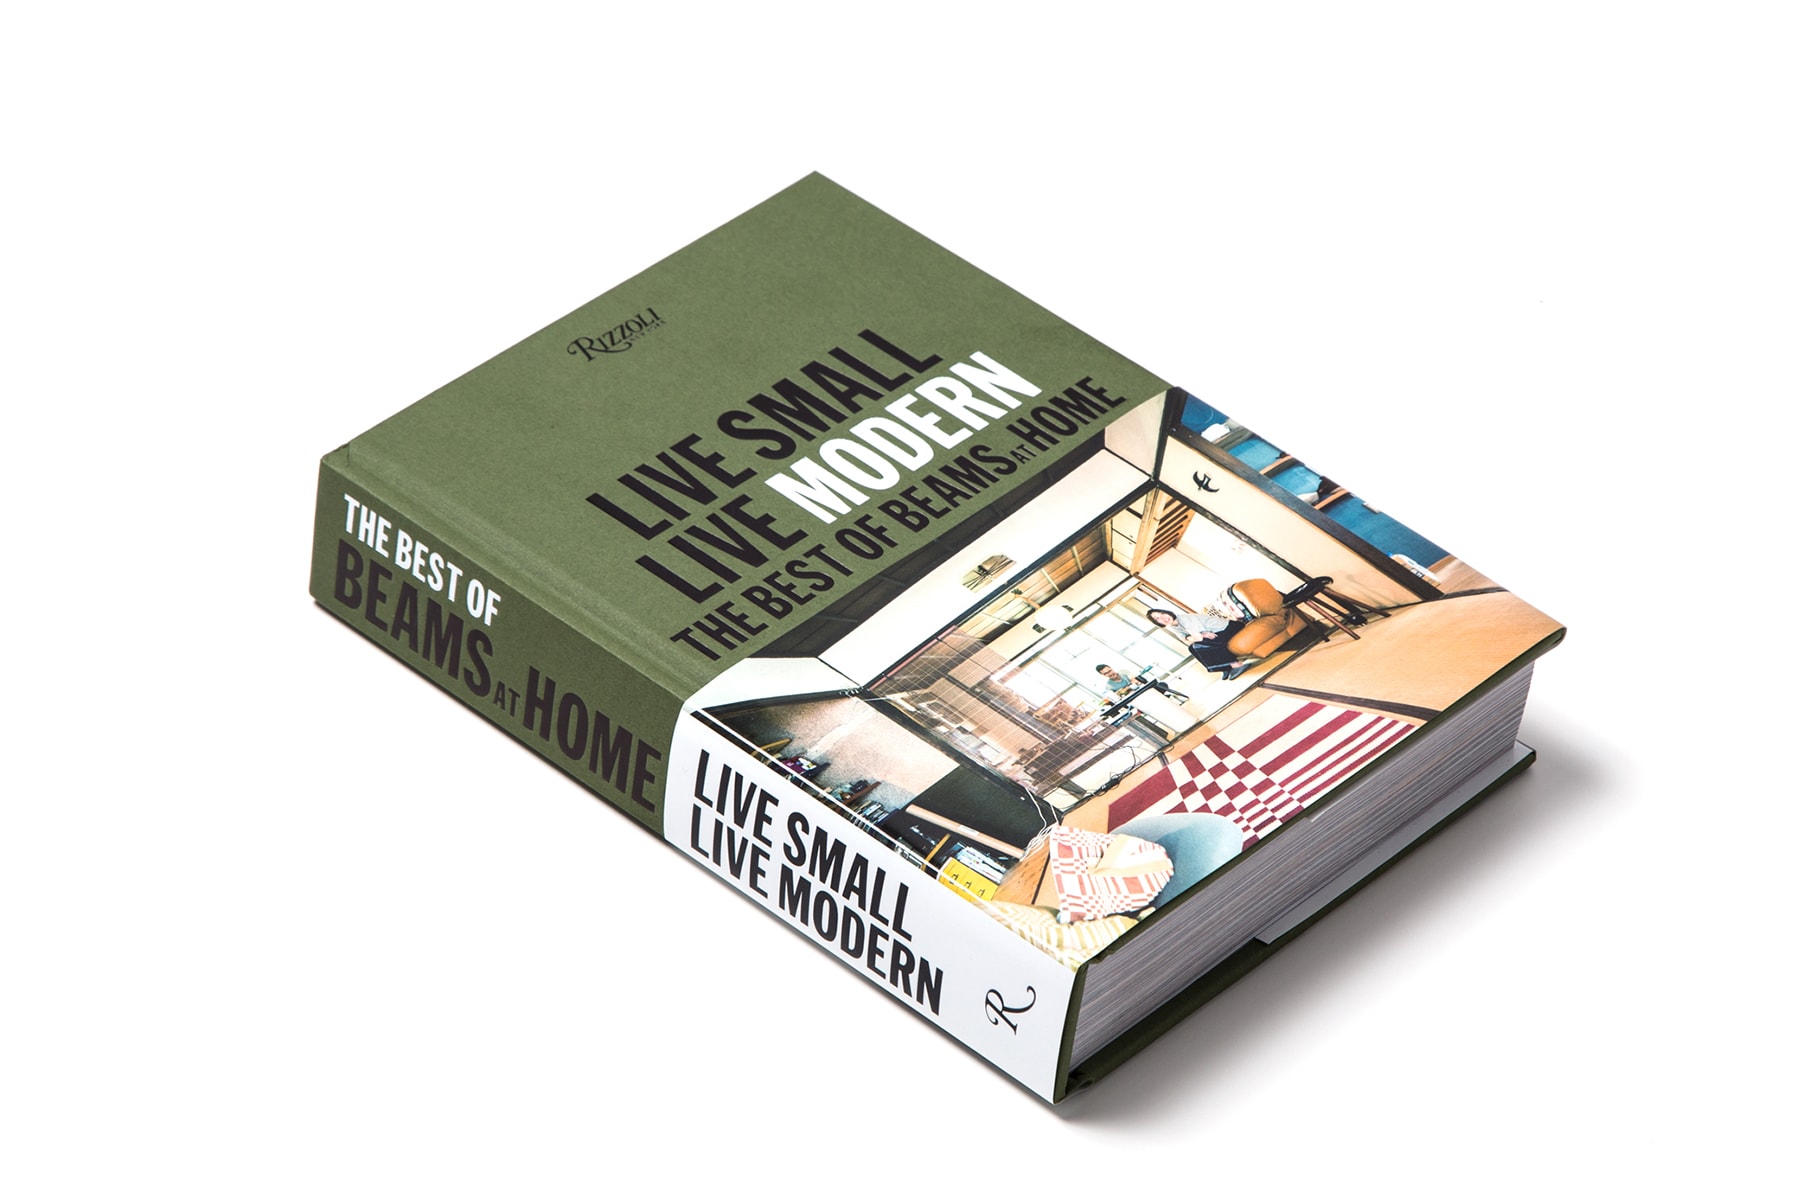 BEAMS ビームス ライフスタイルブック　LIVE SMALL / LIVE MODERN THE BEST OF BEAMS AT HOME『BEAMS AT HOME』　英語版　NY  老舗出版社 Rizzoli International リリース